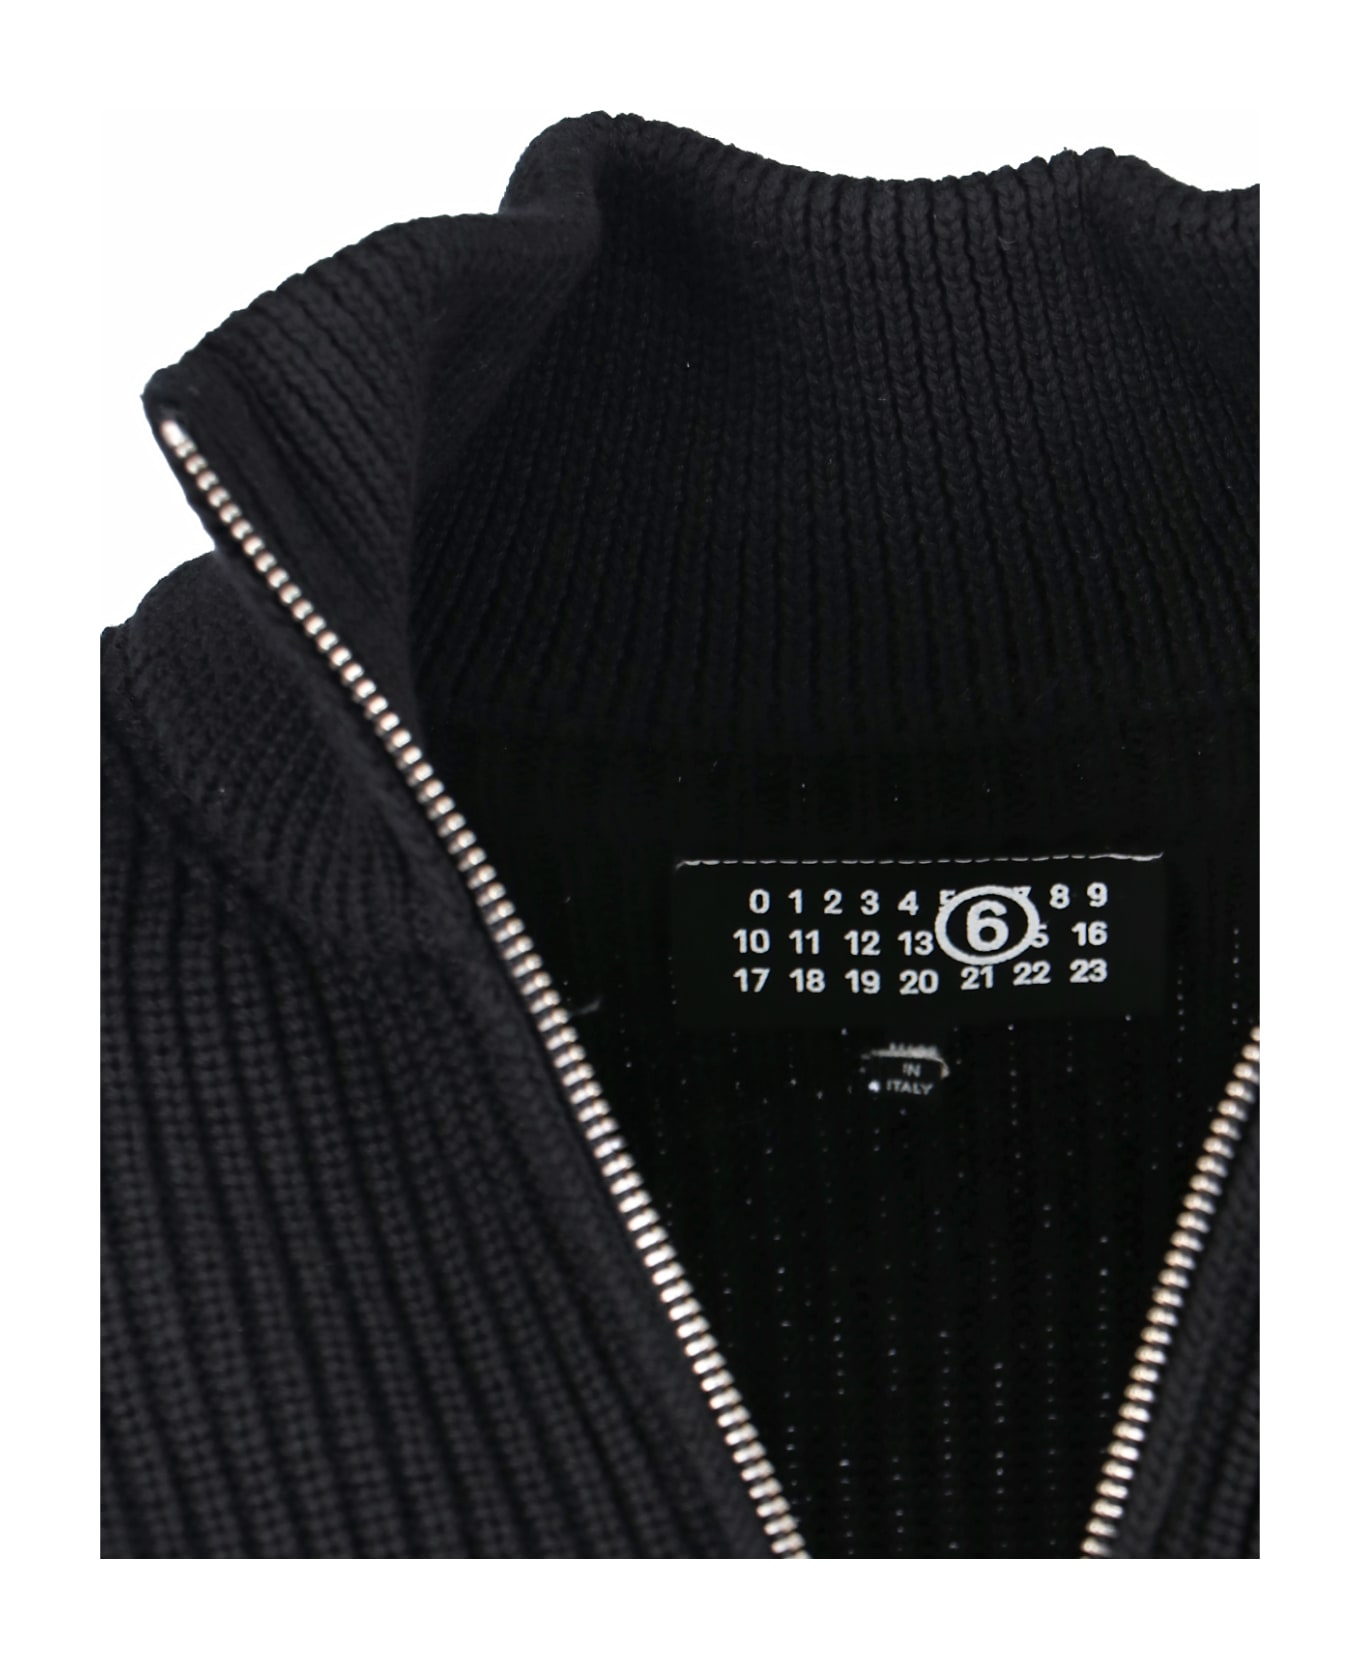 MM6 Maison Margiela Zip Sweater - Black   カーディガン